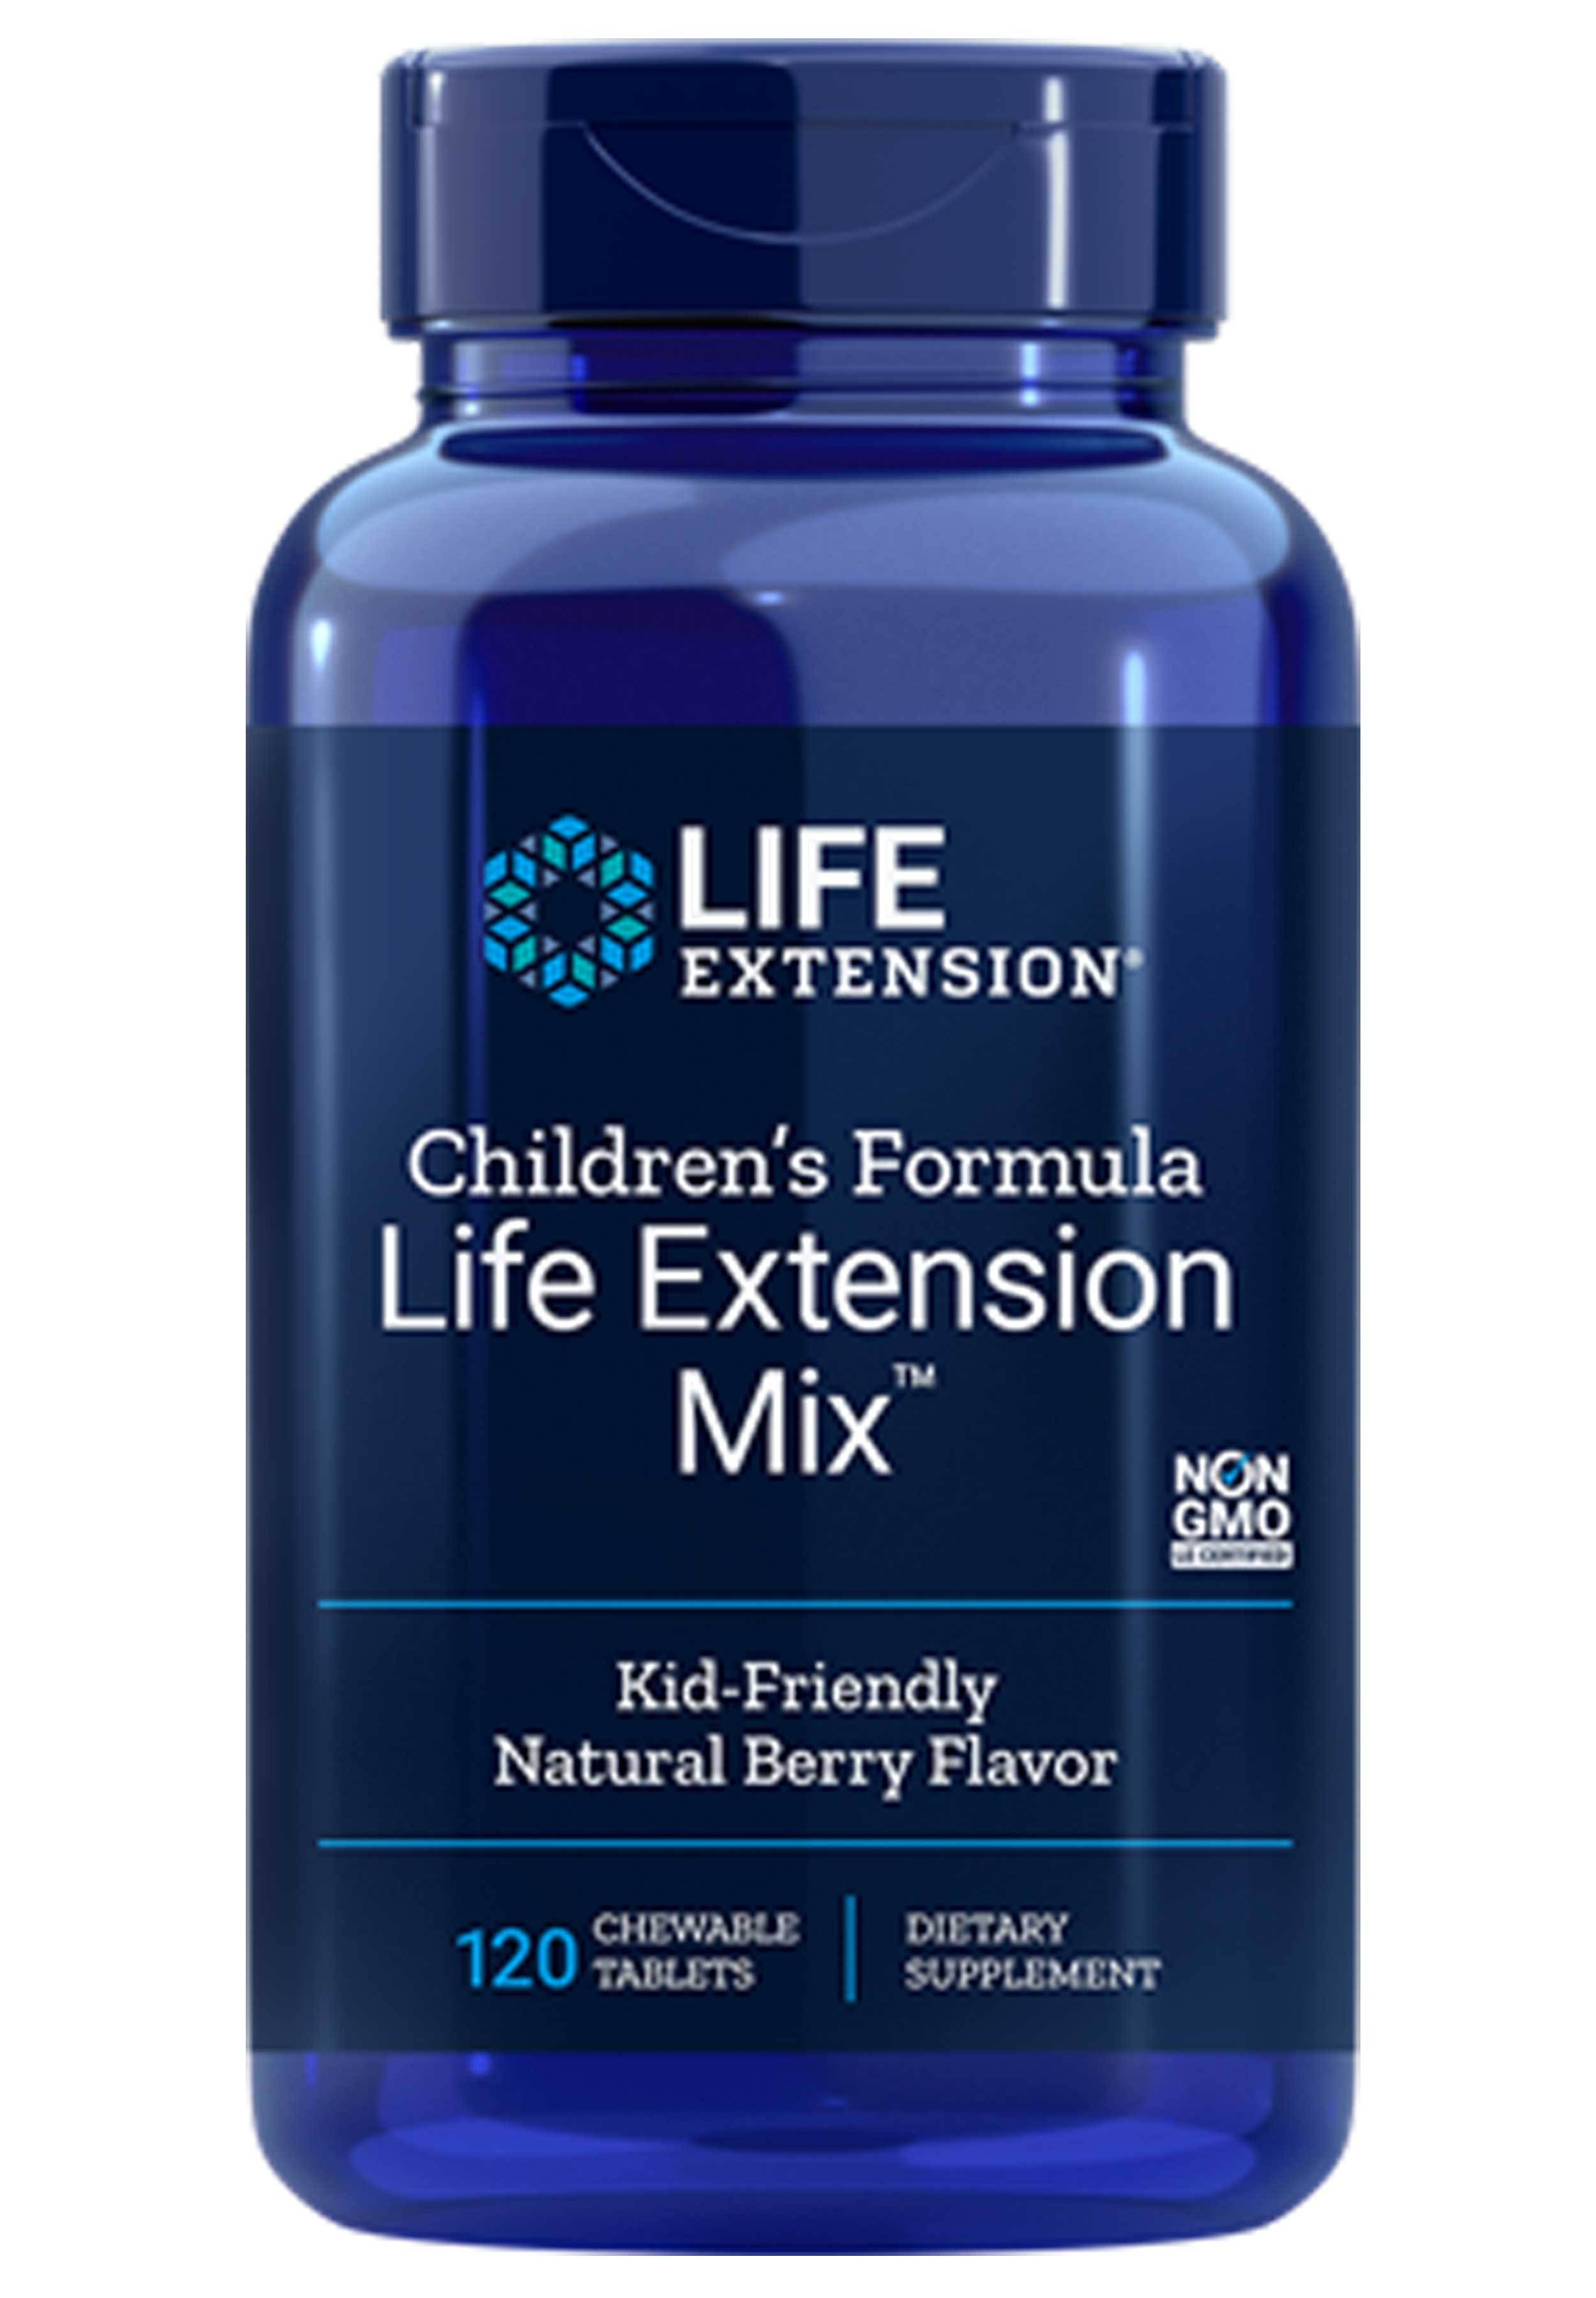 Life Extension Children’s Formula Life Extension Mix